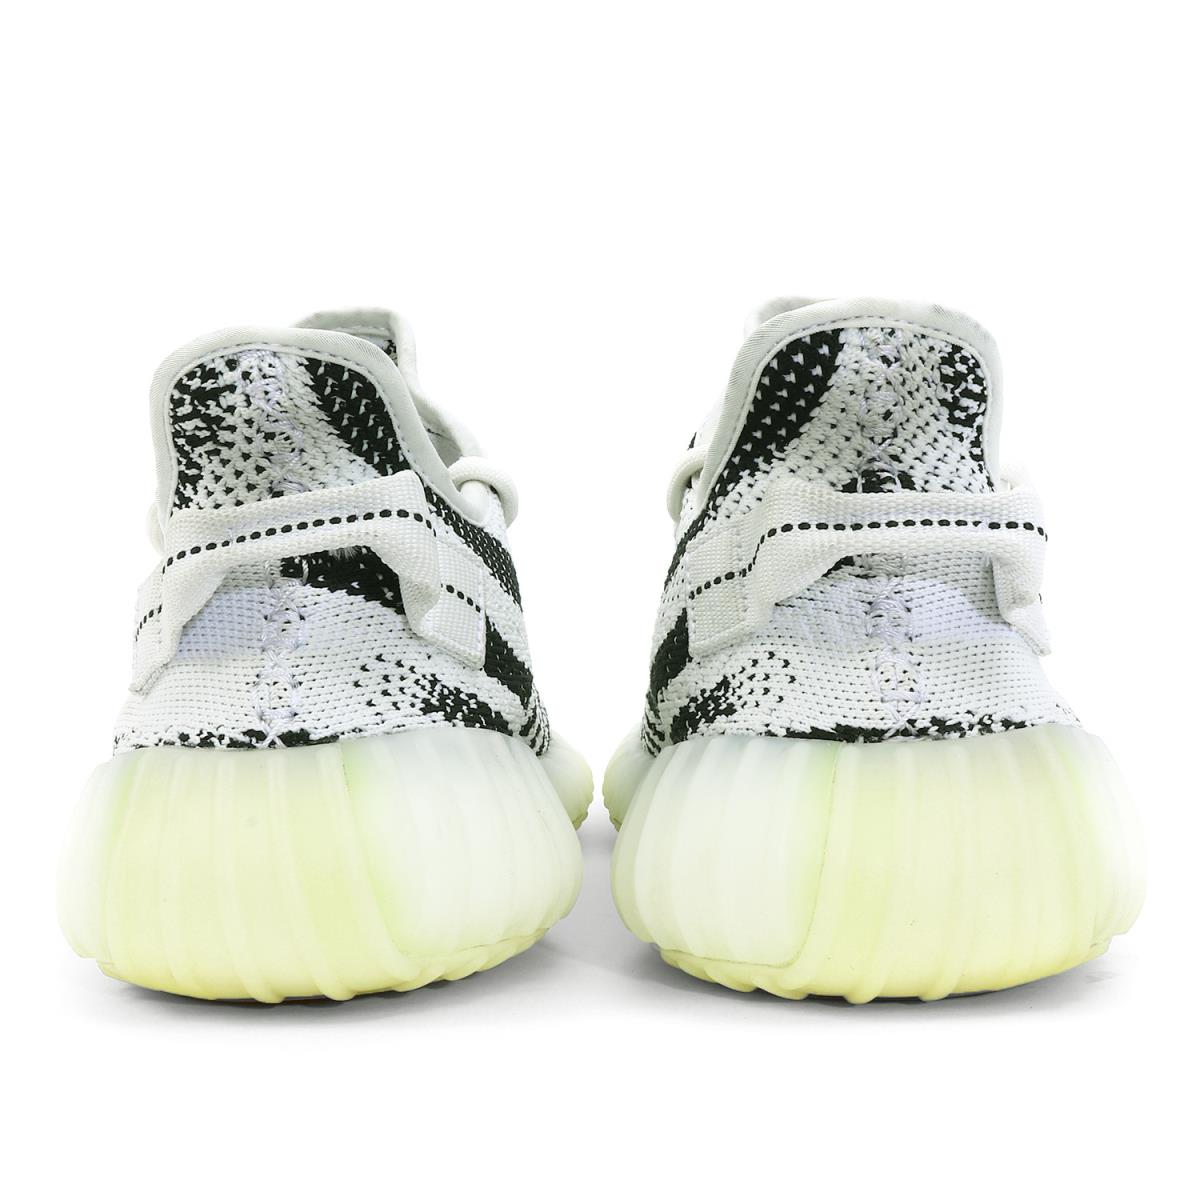 giay-Adidas-Yeezy-Boost-350-V2-Zebra-nam-nu-chinh-hang-tai-tphcm-CP9654-king-shoes-sneaker-tan-binh